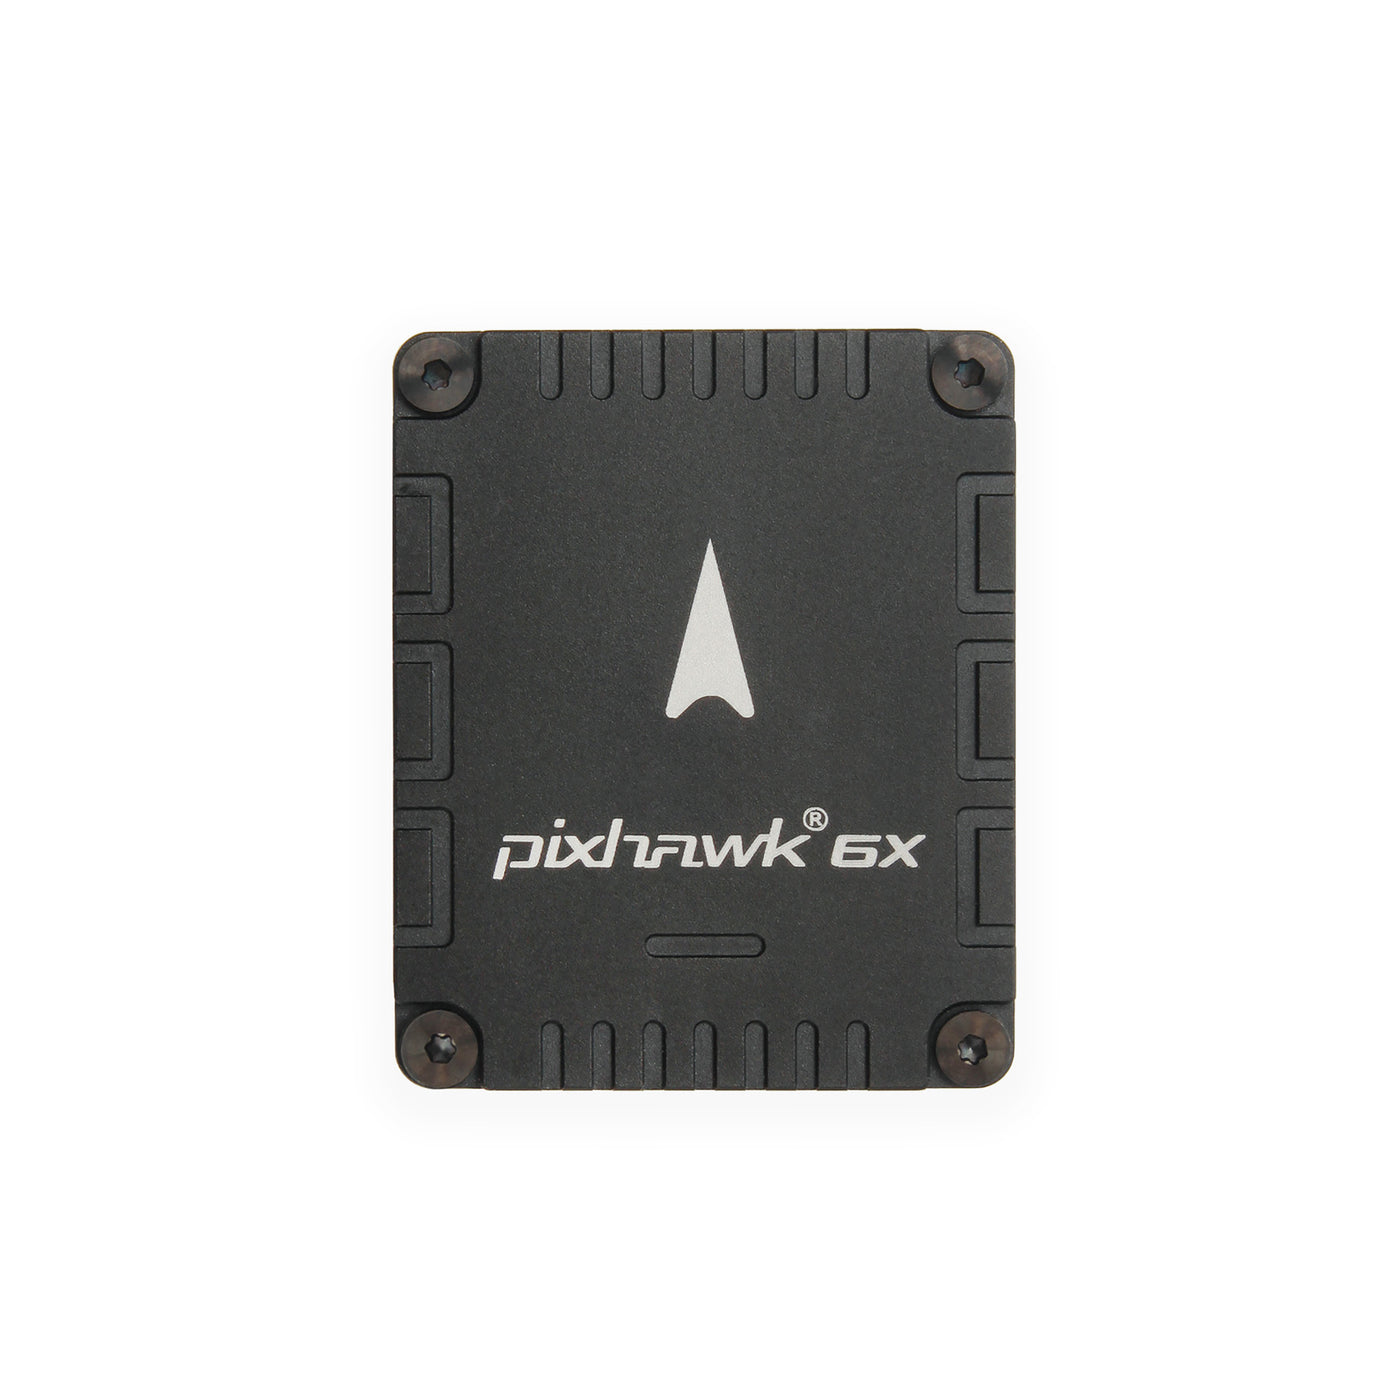 Pixhawk 6X